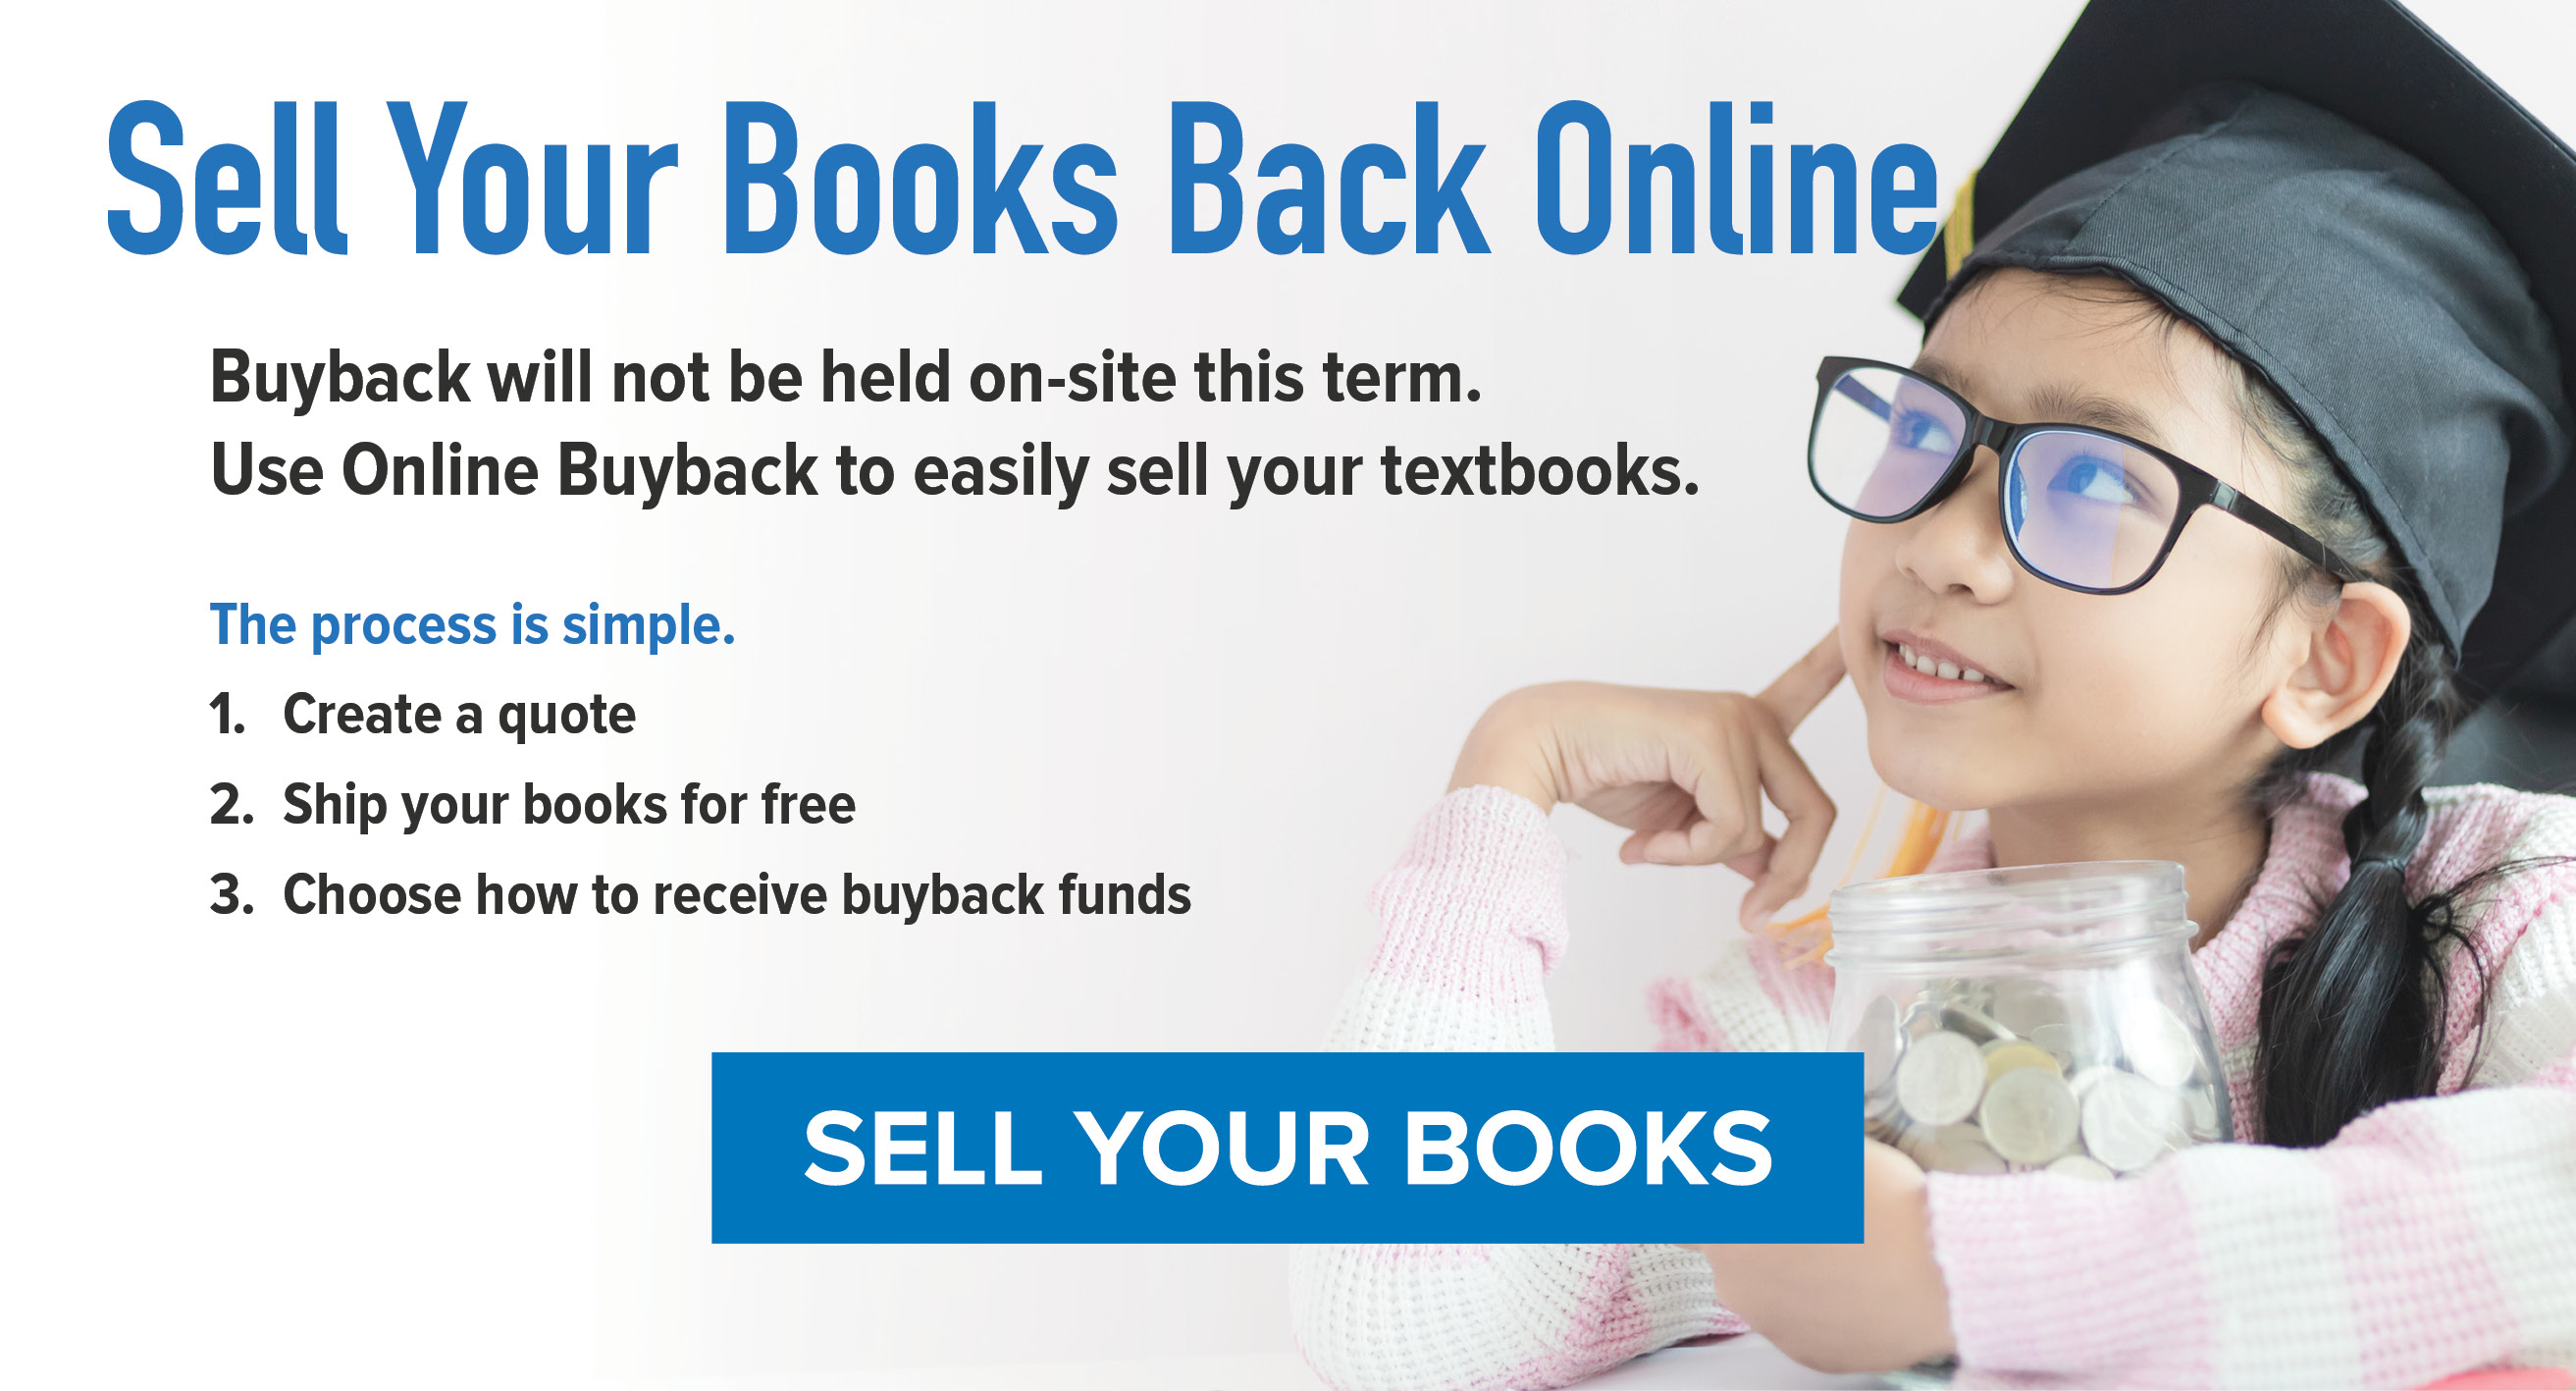 Online Buyback